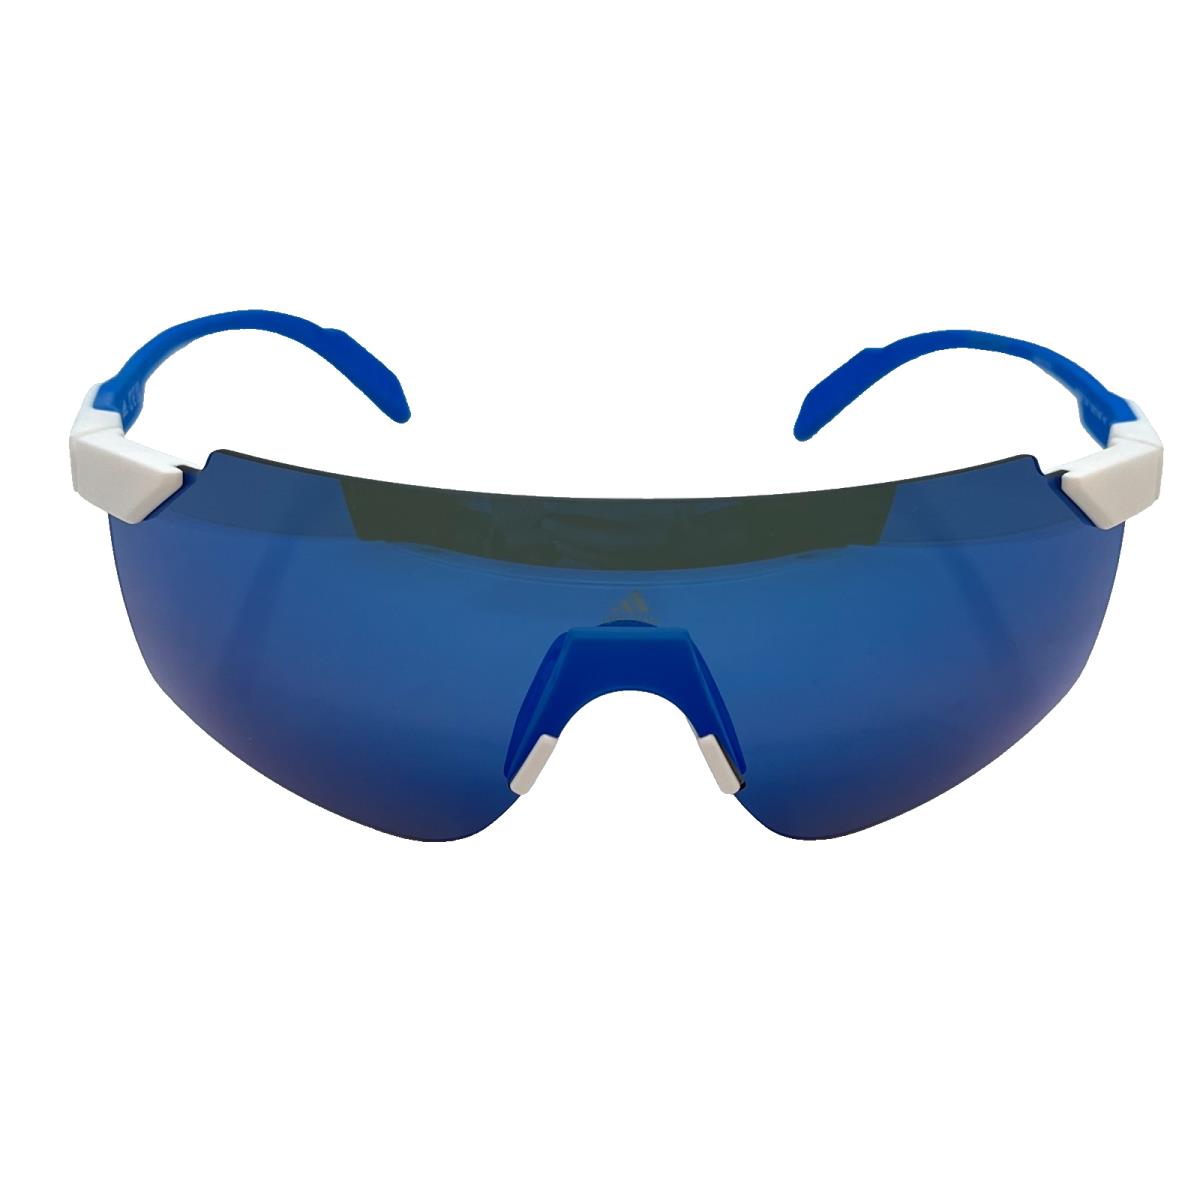 Adidas Sport SP0056 24X 138 - White / Blue Sunglasses Case